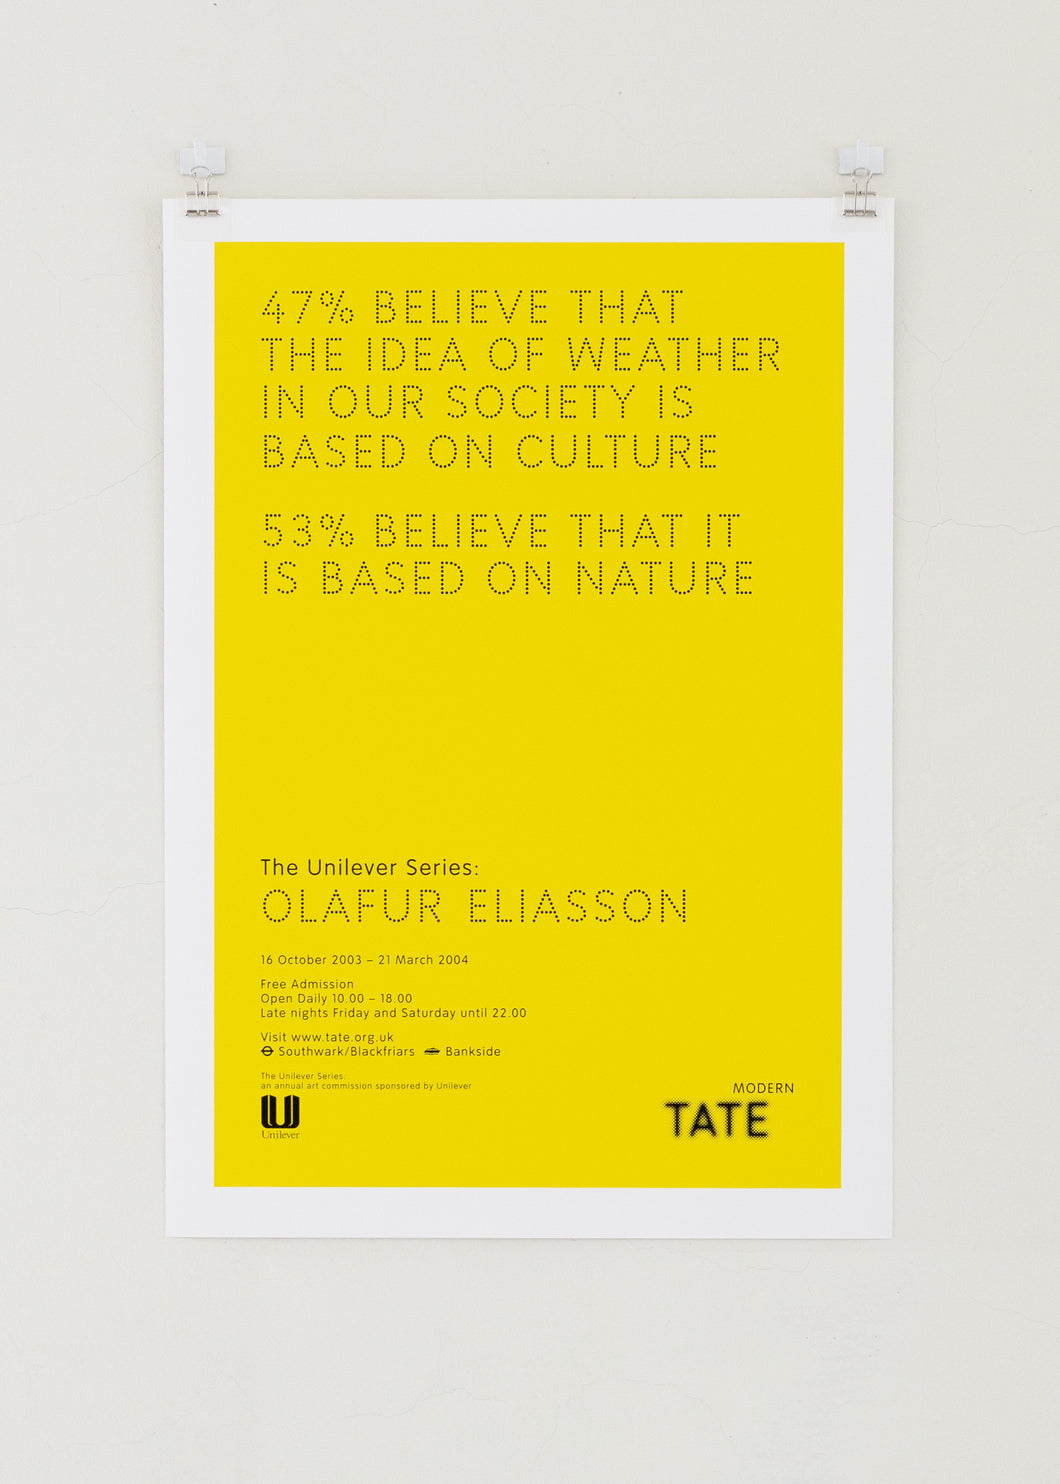 Olafur Eliasson (2004 Tate vintage poster reproduction)